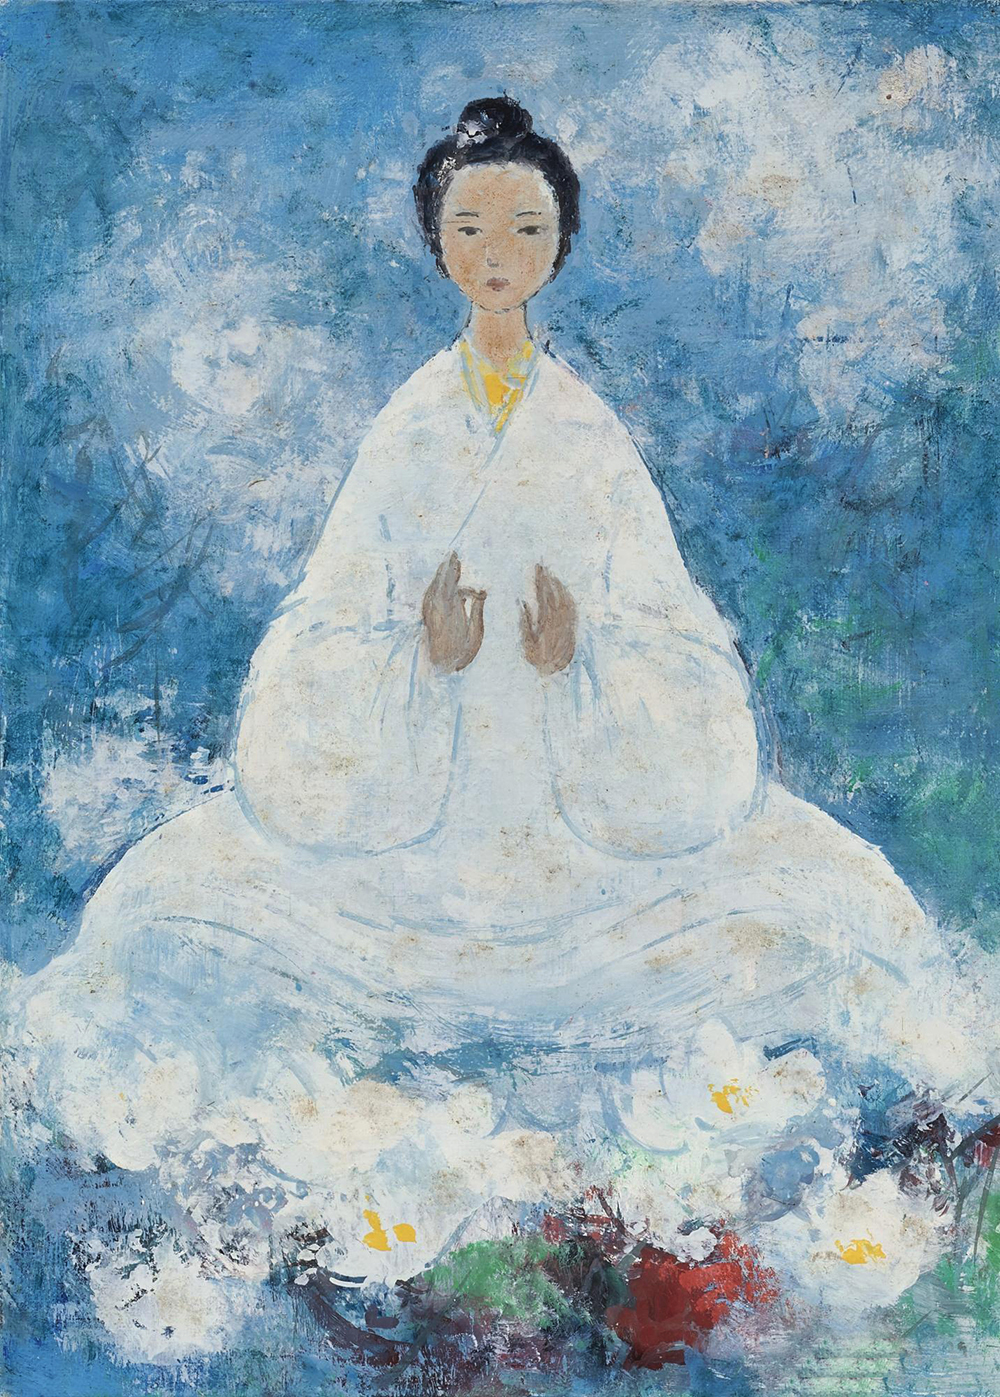 Buddhist Buddha painting on canvas BUD0151